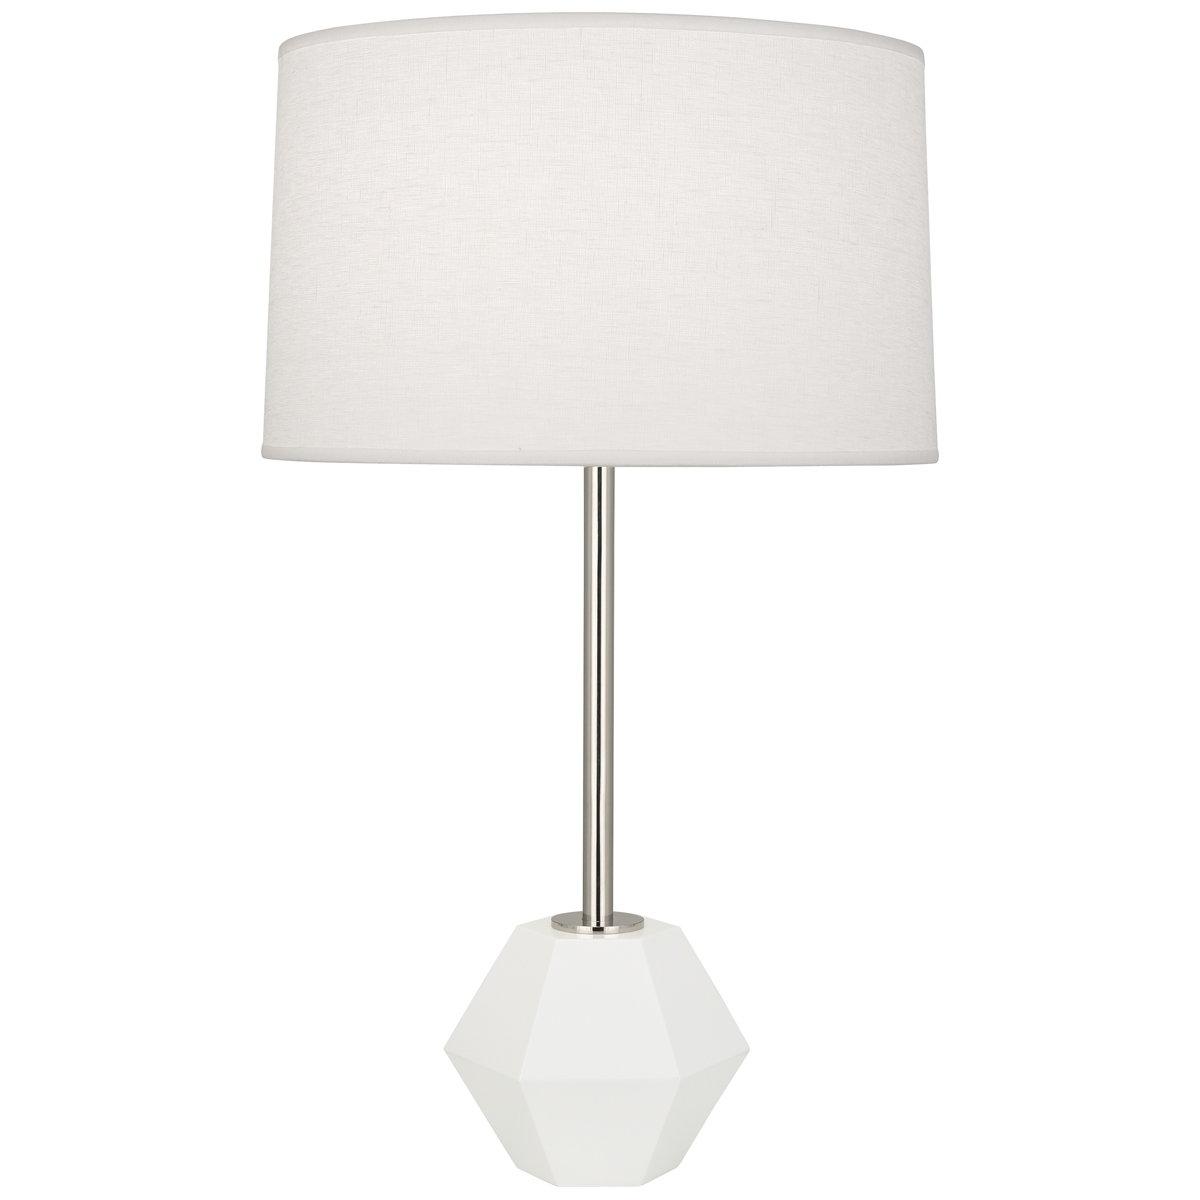 Marcel Table Lamp